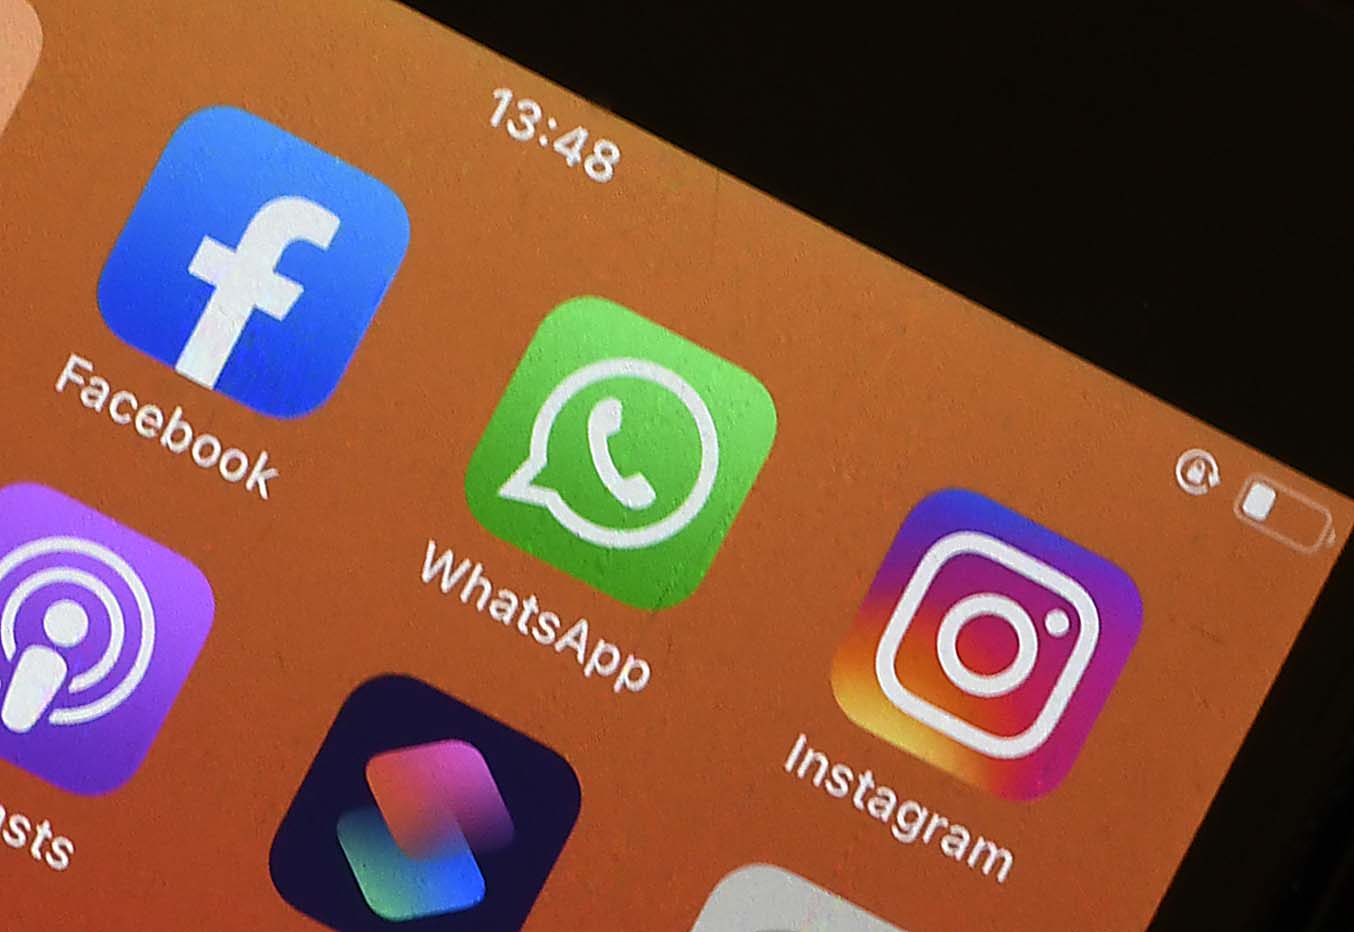 Administradores de grupos en WhatsApp podrán eliminar mensajes de integrantes